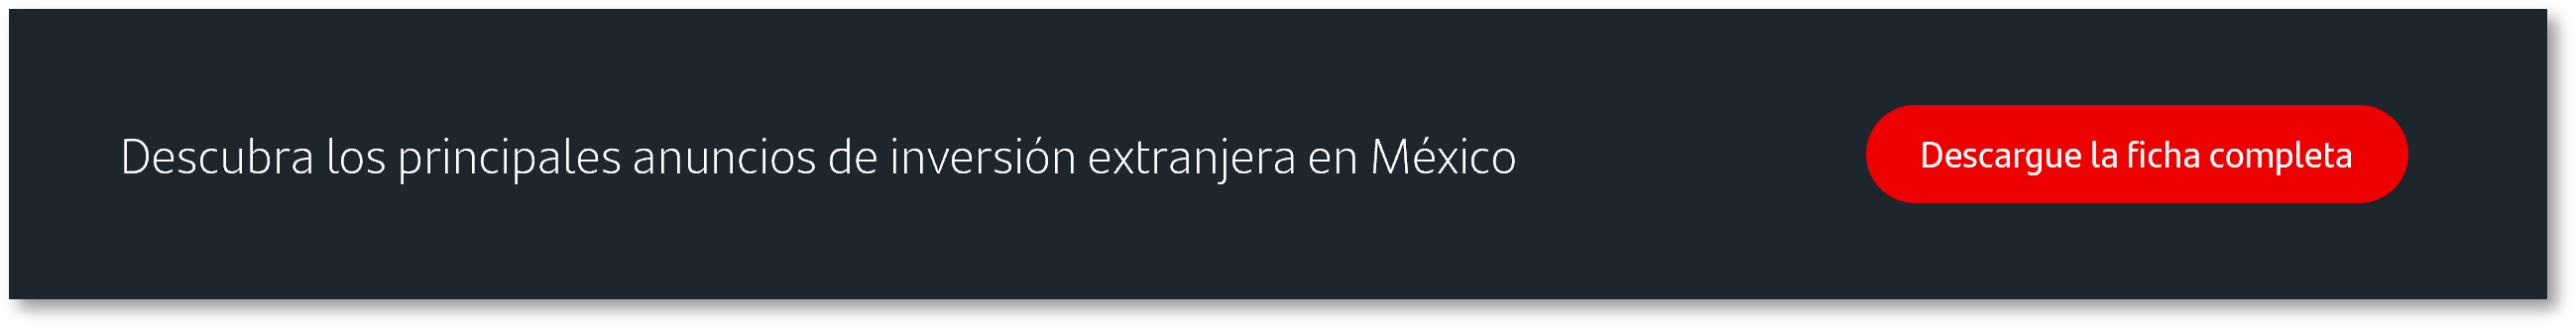 Principales anuncios de inversión extranjera en México - Nearshoring